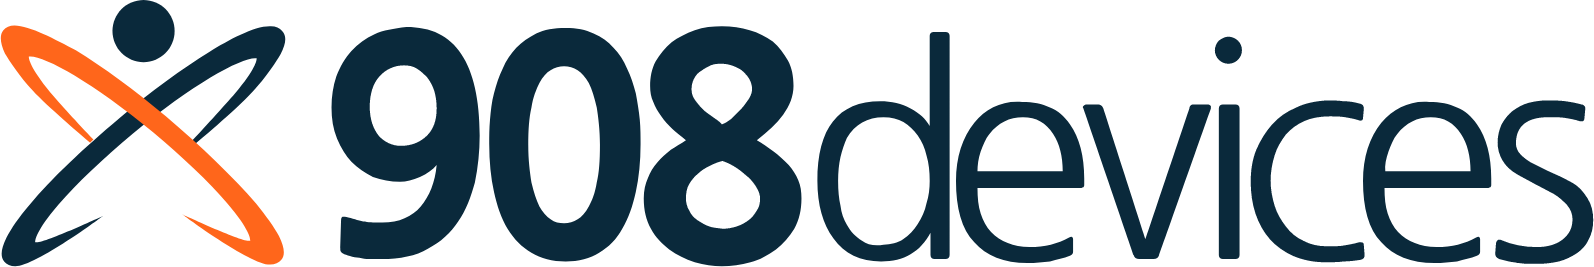 908 Devices logo large (transparent PNG)